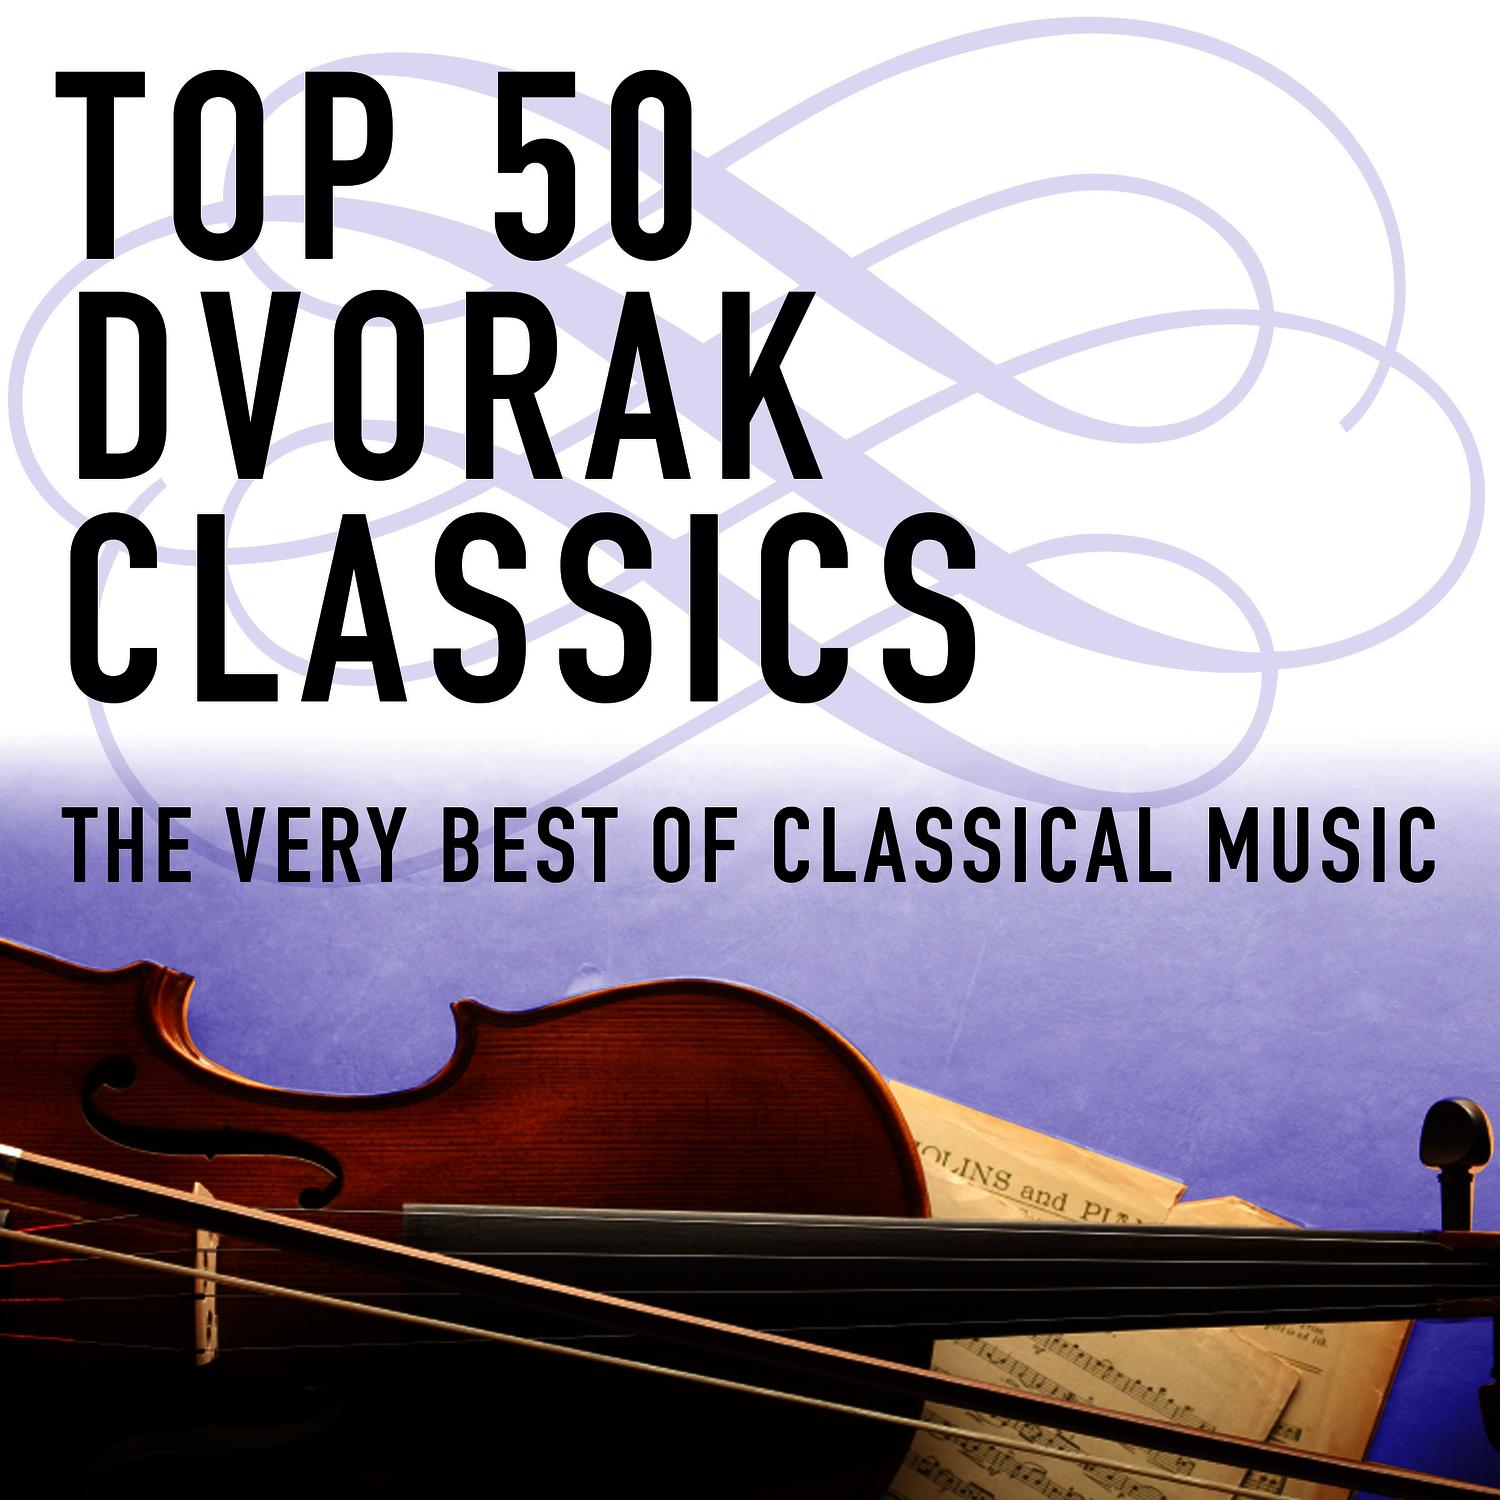 Top 50 Dvora k Classics  The Very Best of Classical Music